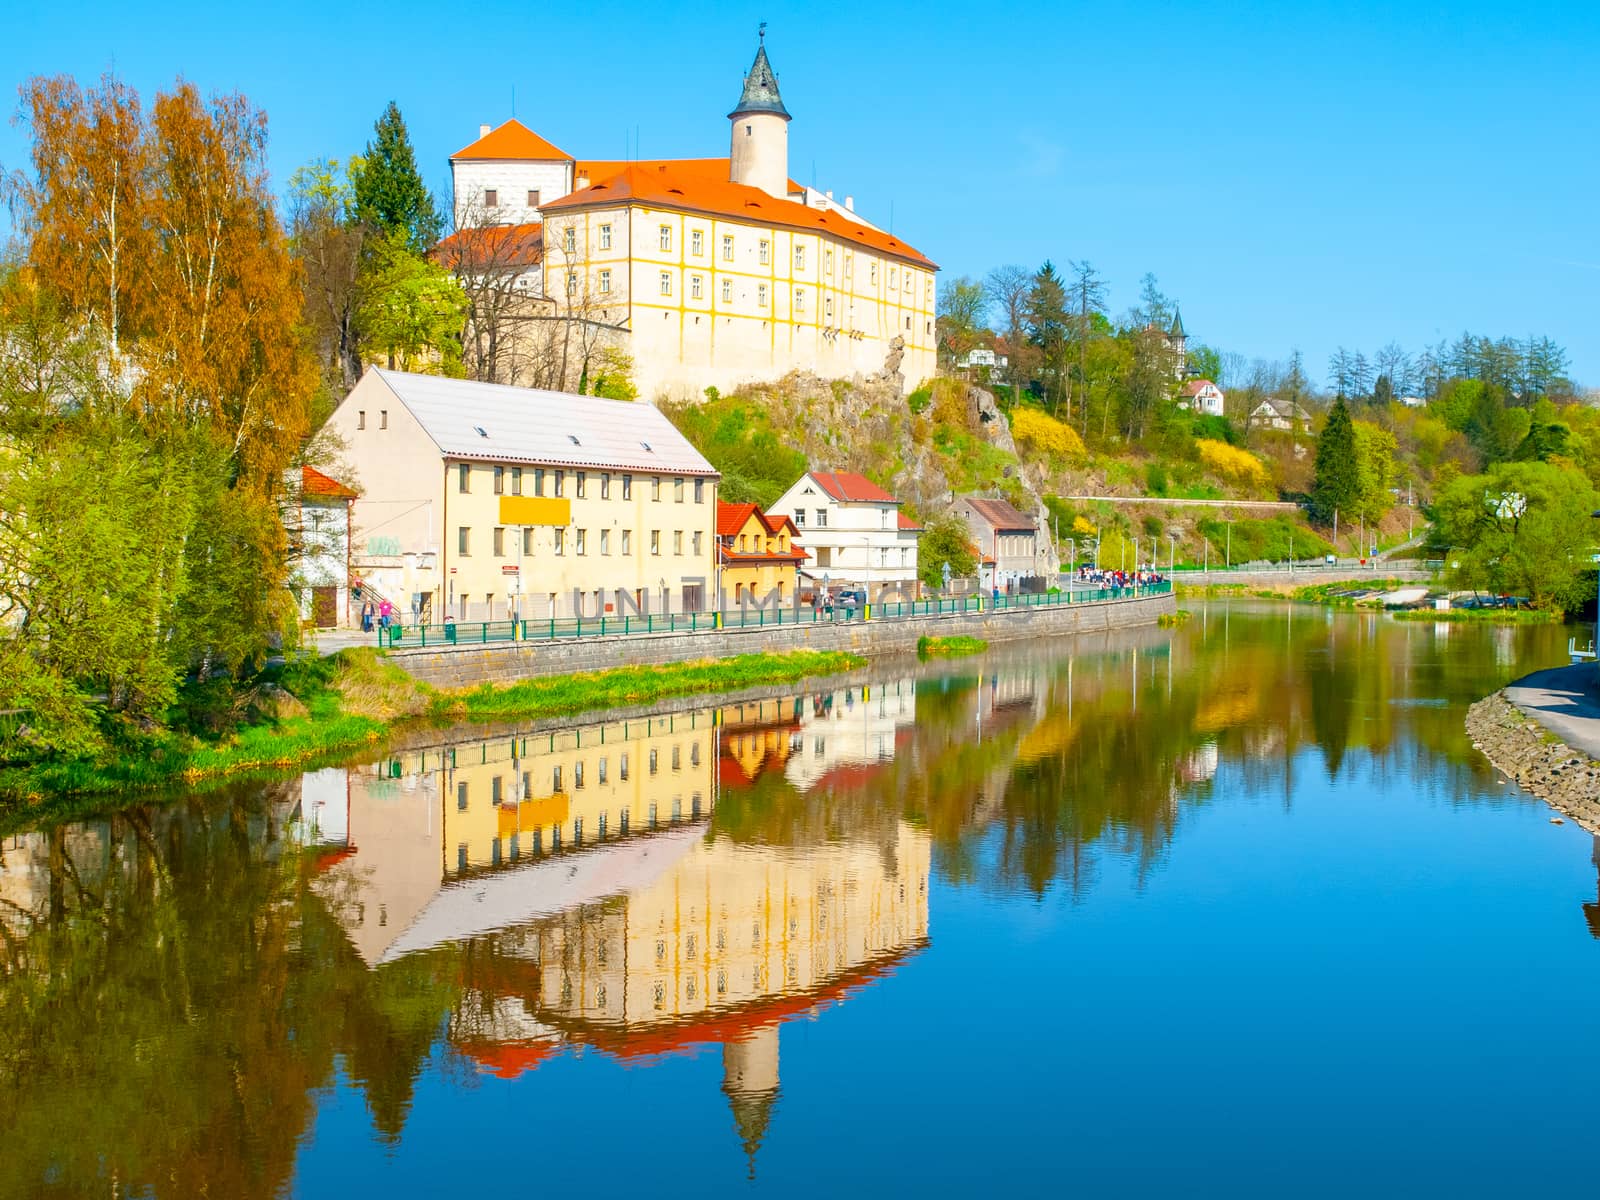 Medieval Castle Ledec nad Sazavou. Reflection in Sazava River, Czech Republic.